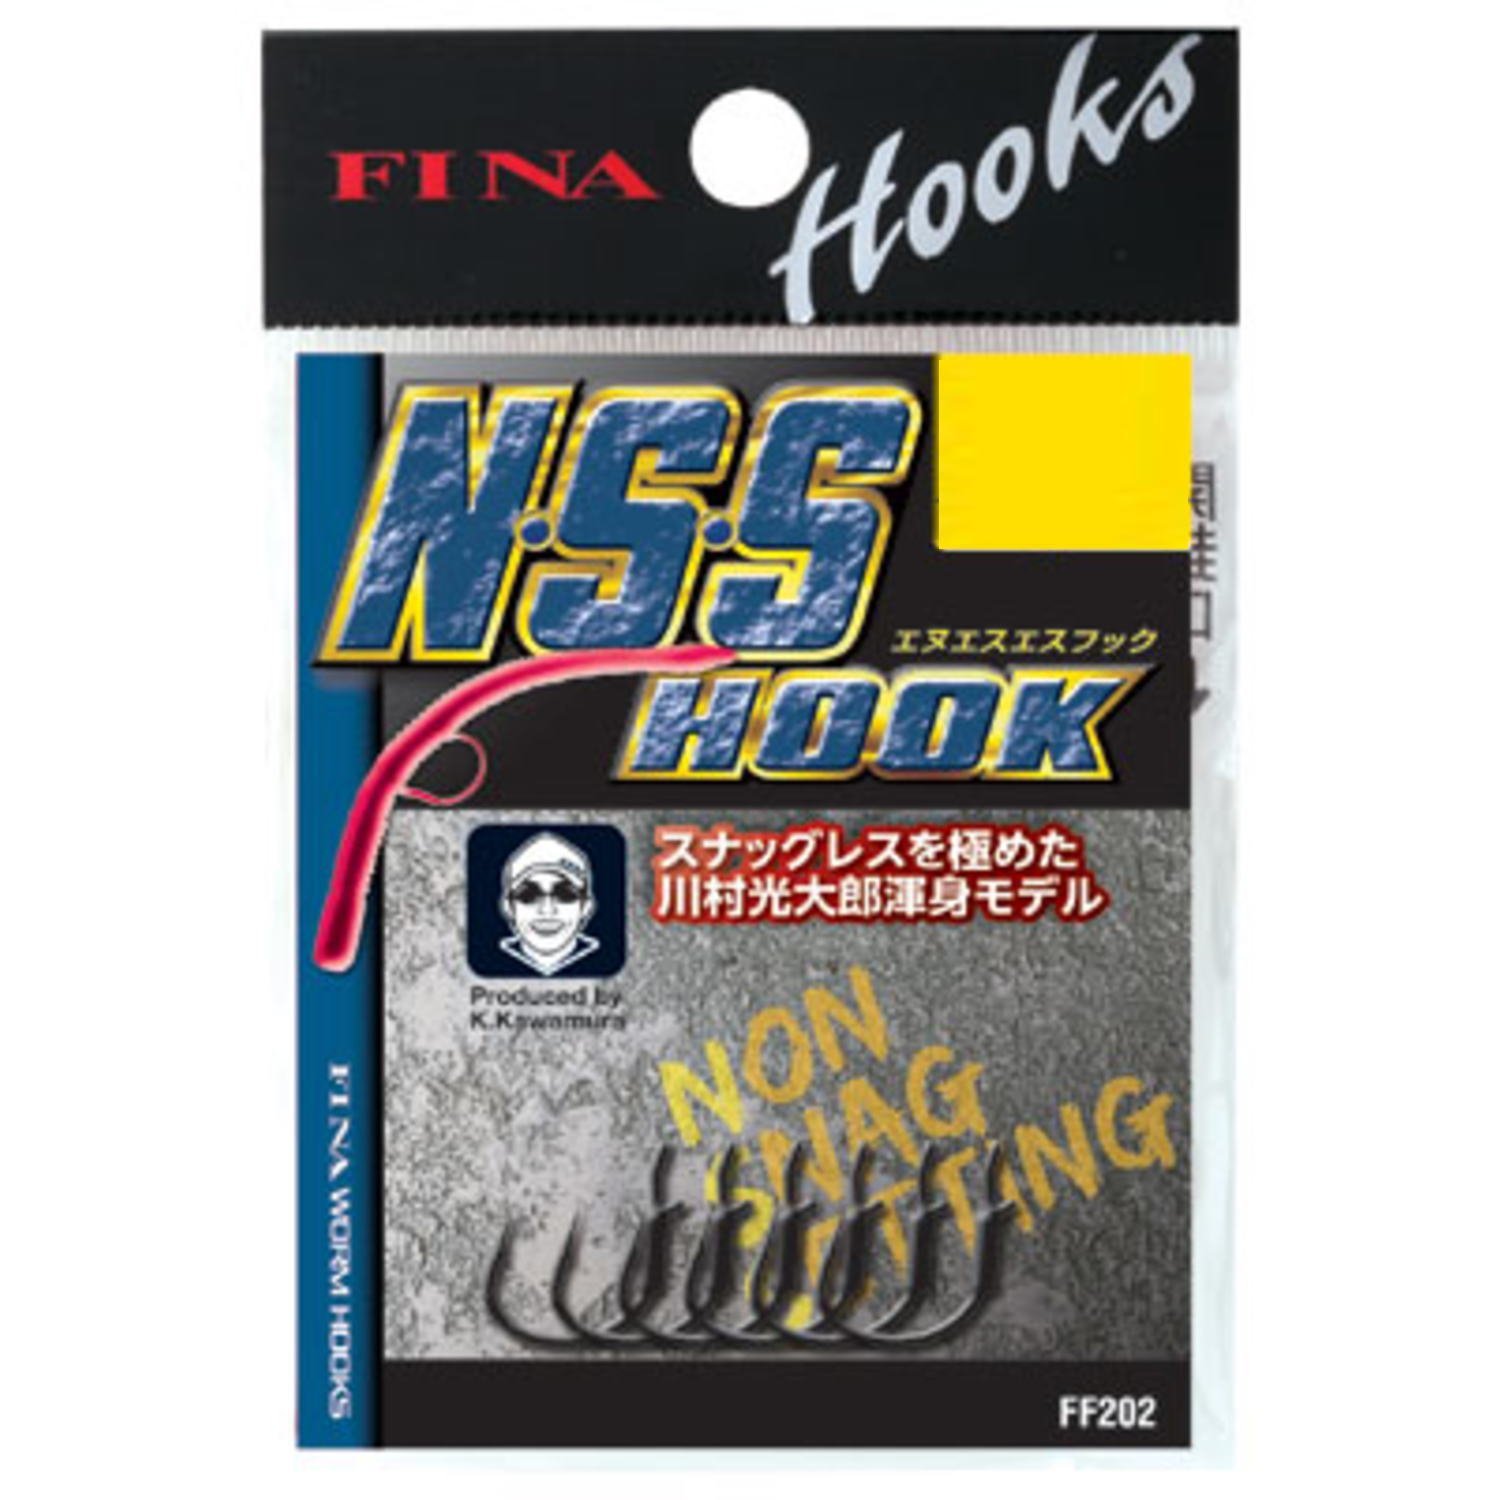 Fishing Hooks - Fishing Hooks Hayabusa - Fishing Hooks Hayabusa